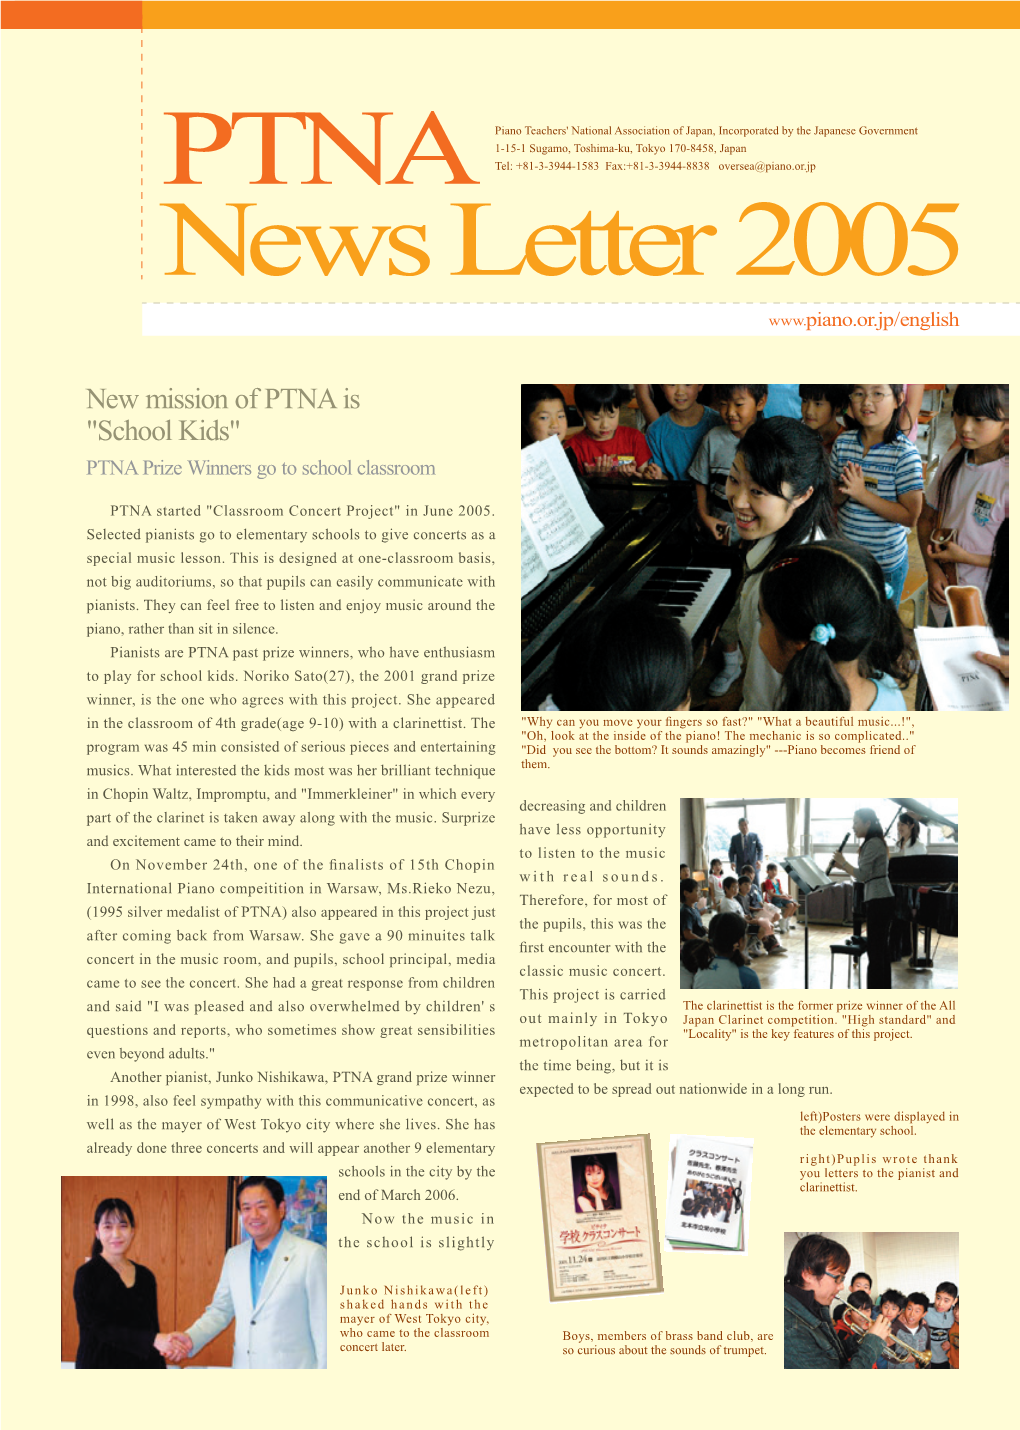 PTNA News Letter 2005